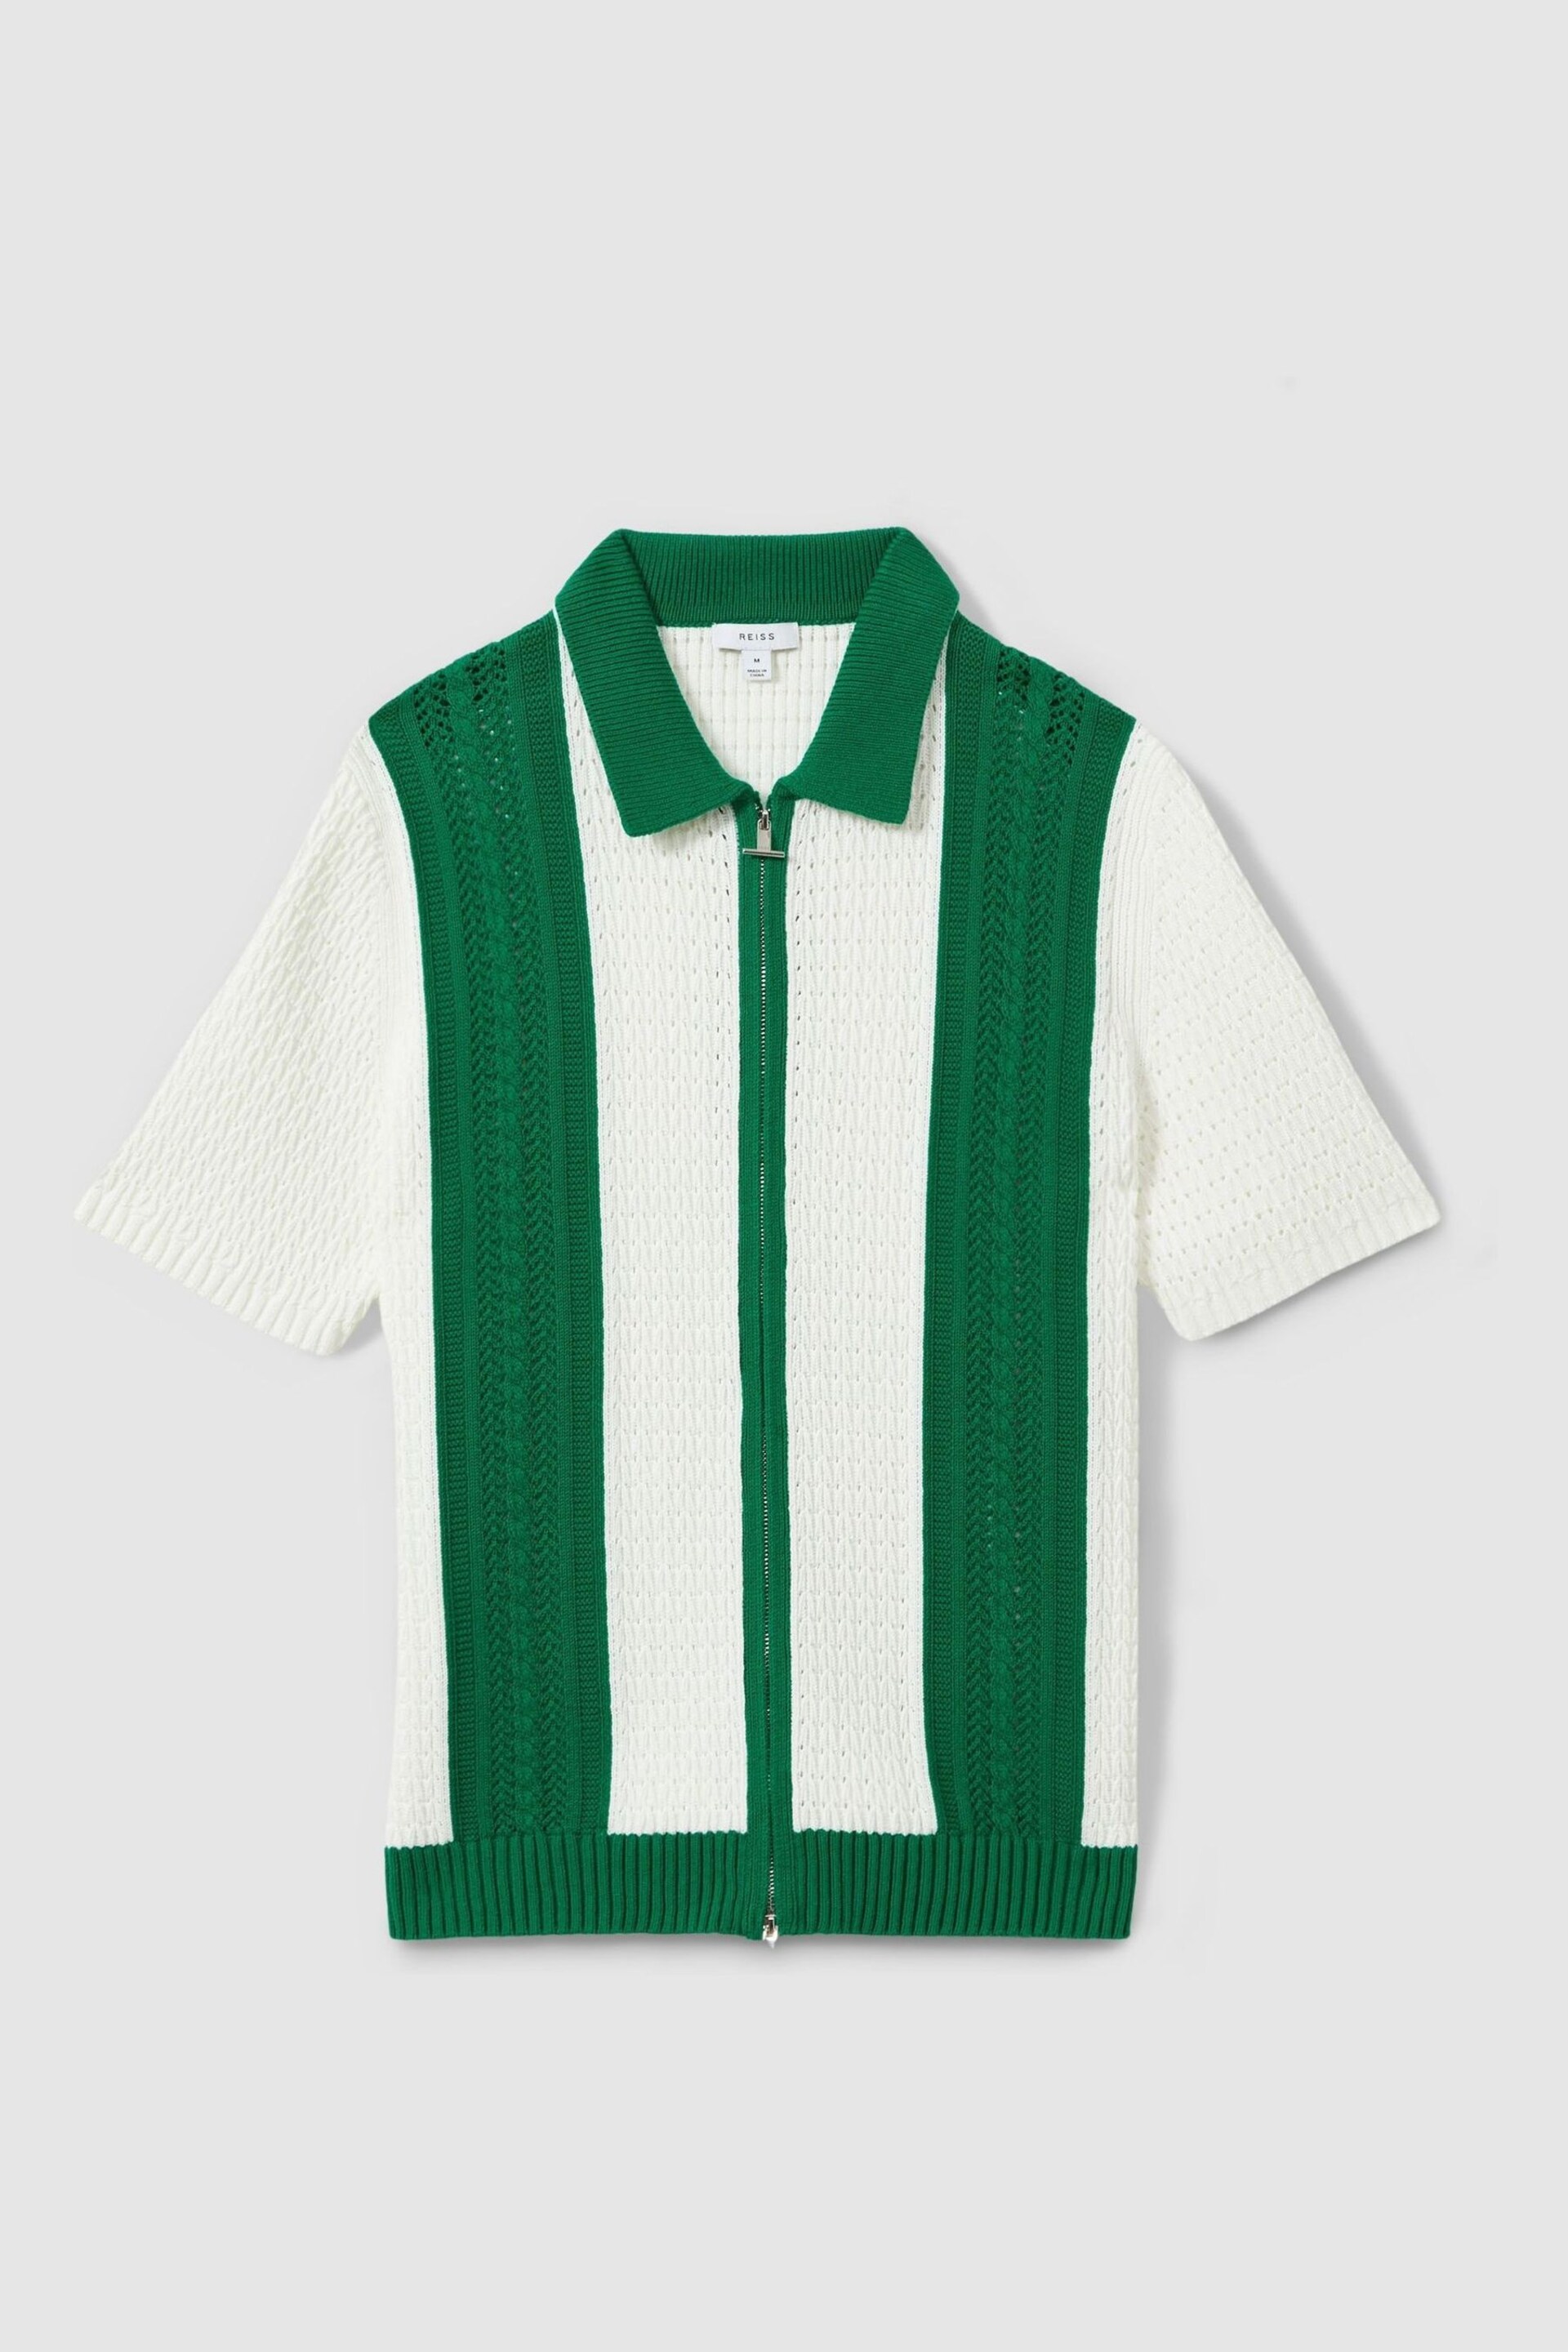 Reiss White/Bright Green Painter Crochet Zip-Front Shirt - Image 2 of 5